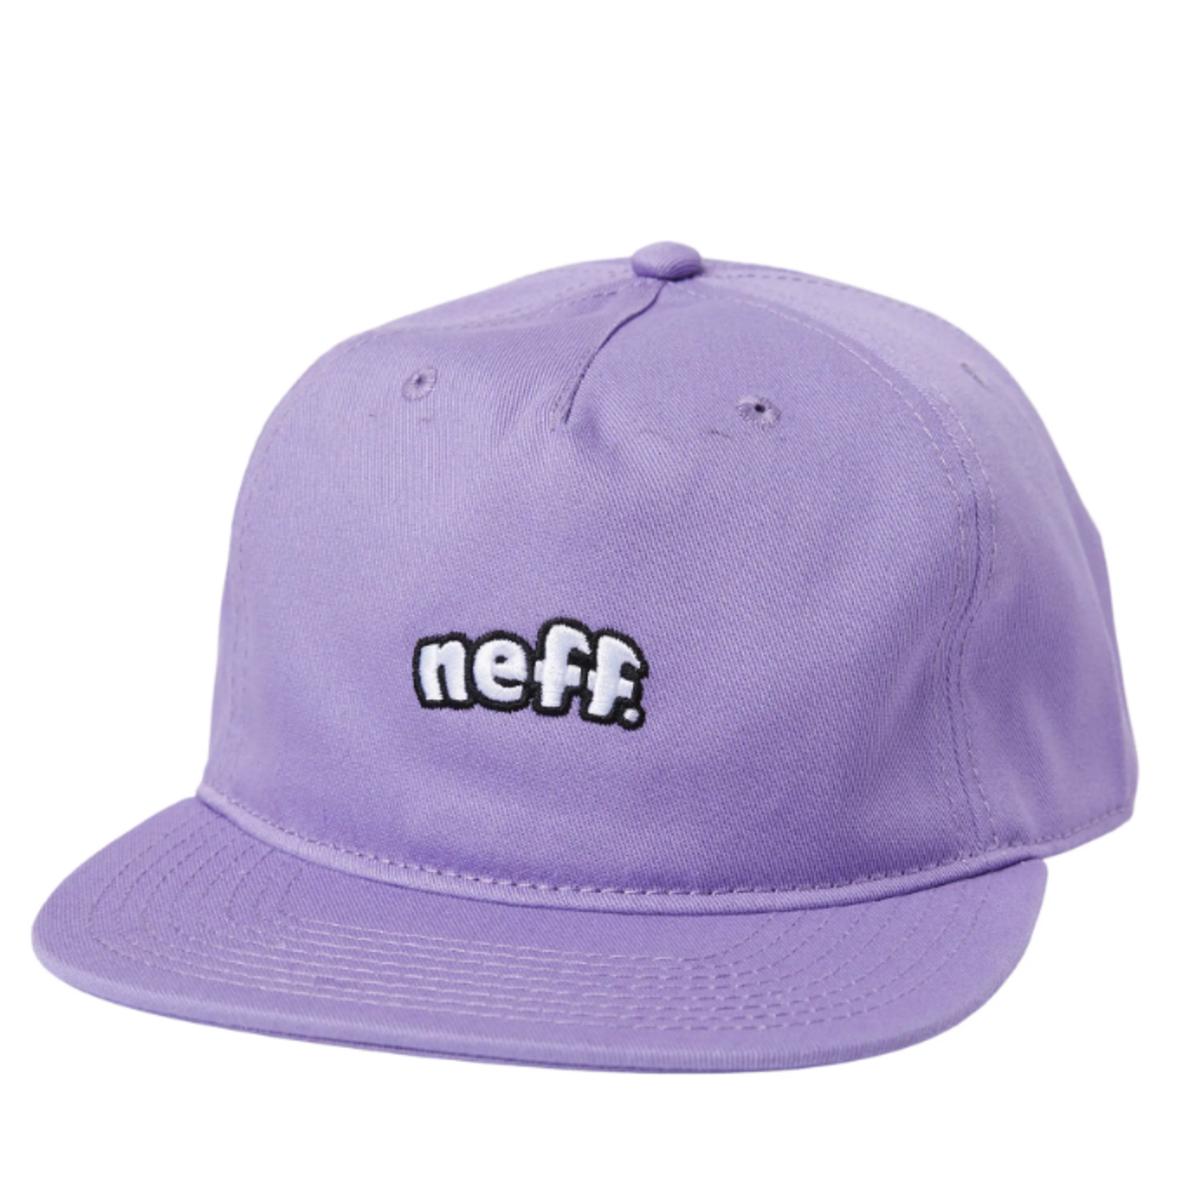 Neff Bulged Unstructured Cap